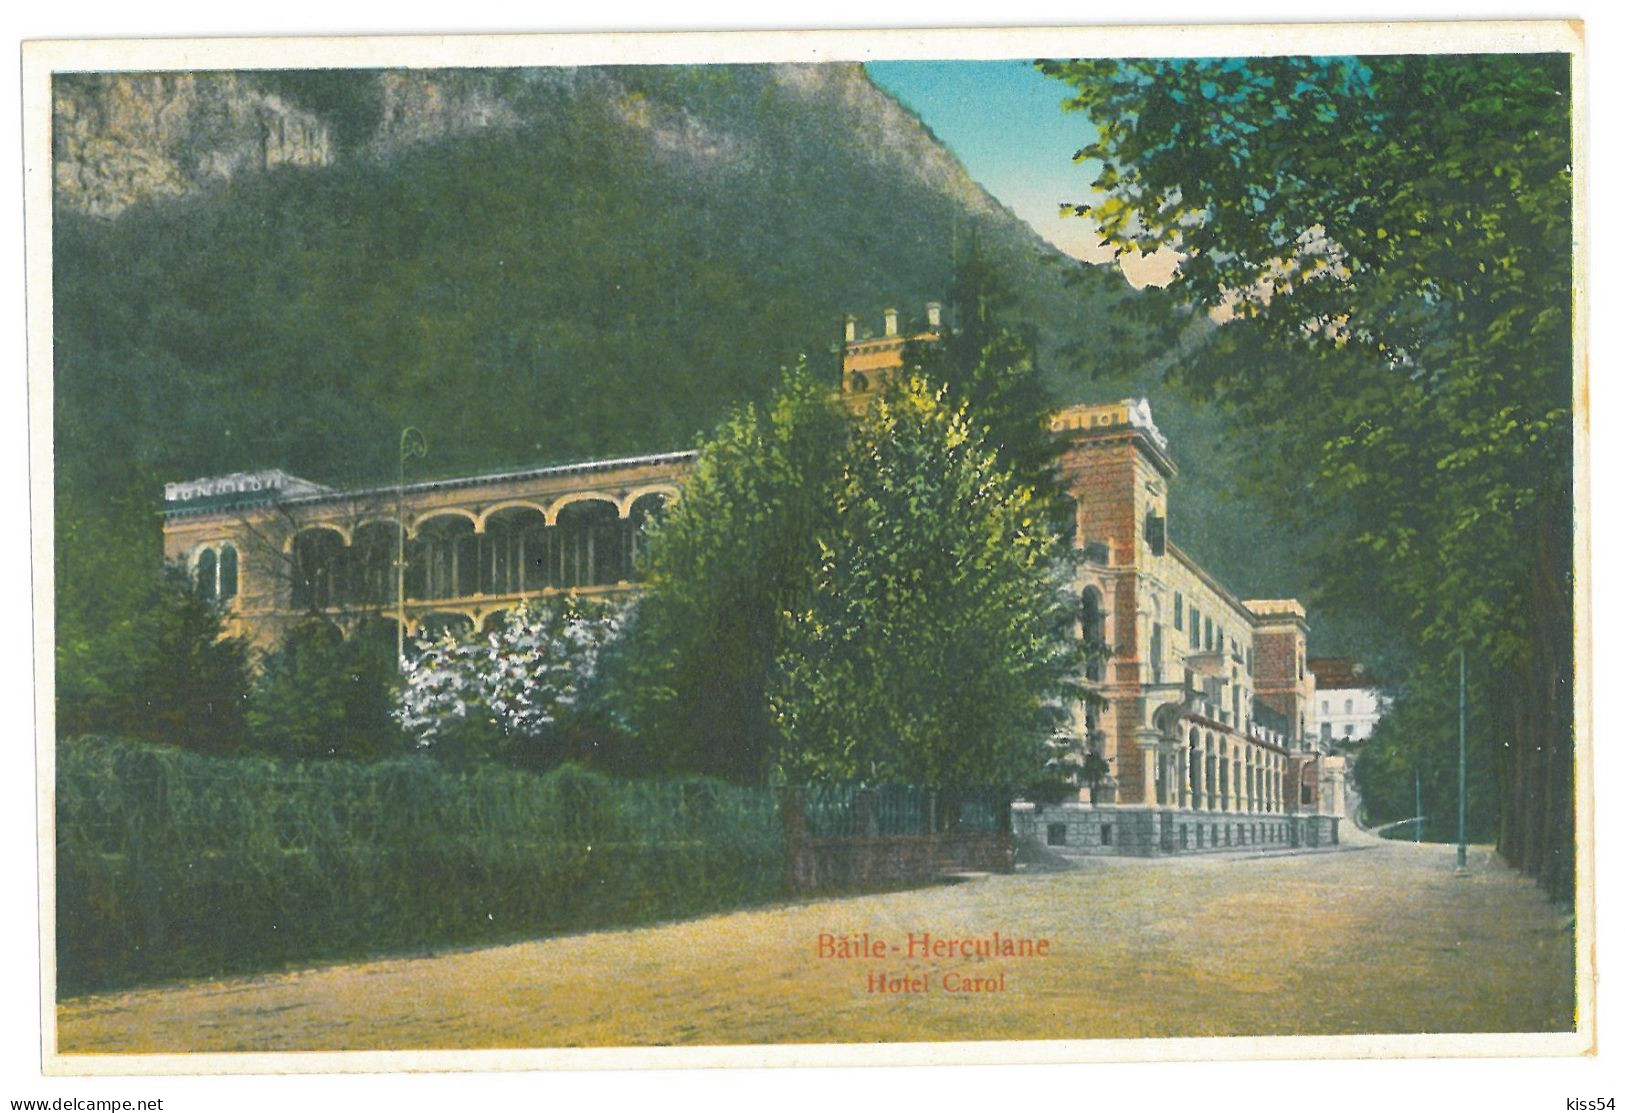 RO 47 - 25082 Baile HERCULANE, Carol Hotel, Romania - Old Postcard - Unused - Rumänien